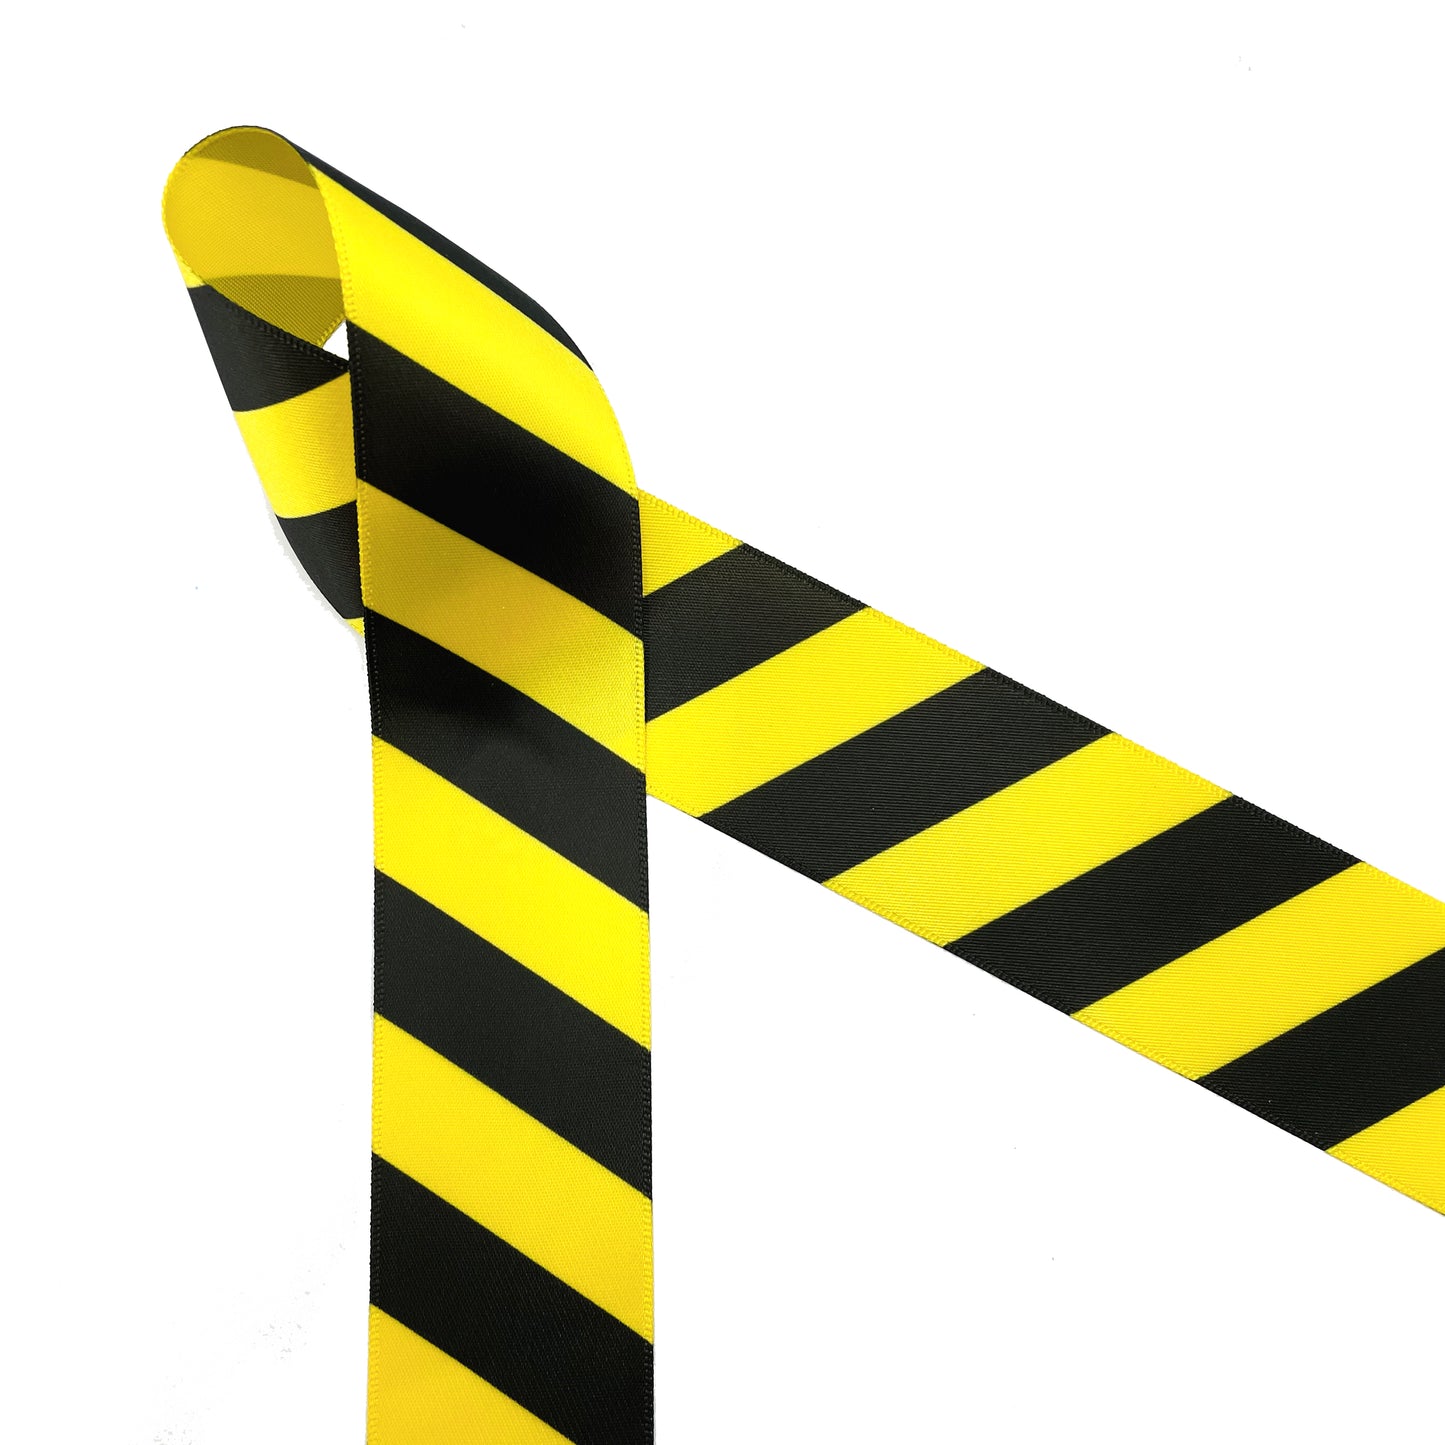 Caution Tape ribbon diagonal black stripes printed on 5/8" and 1.5" bright yellow single face satin